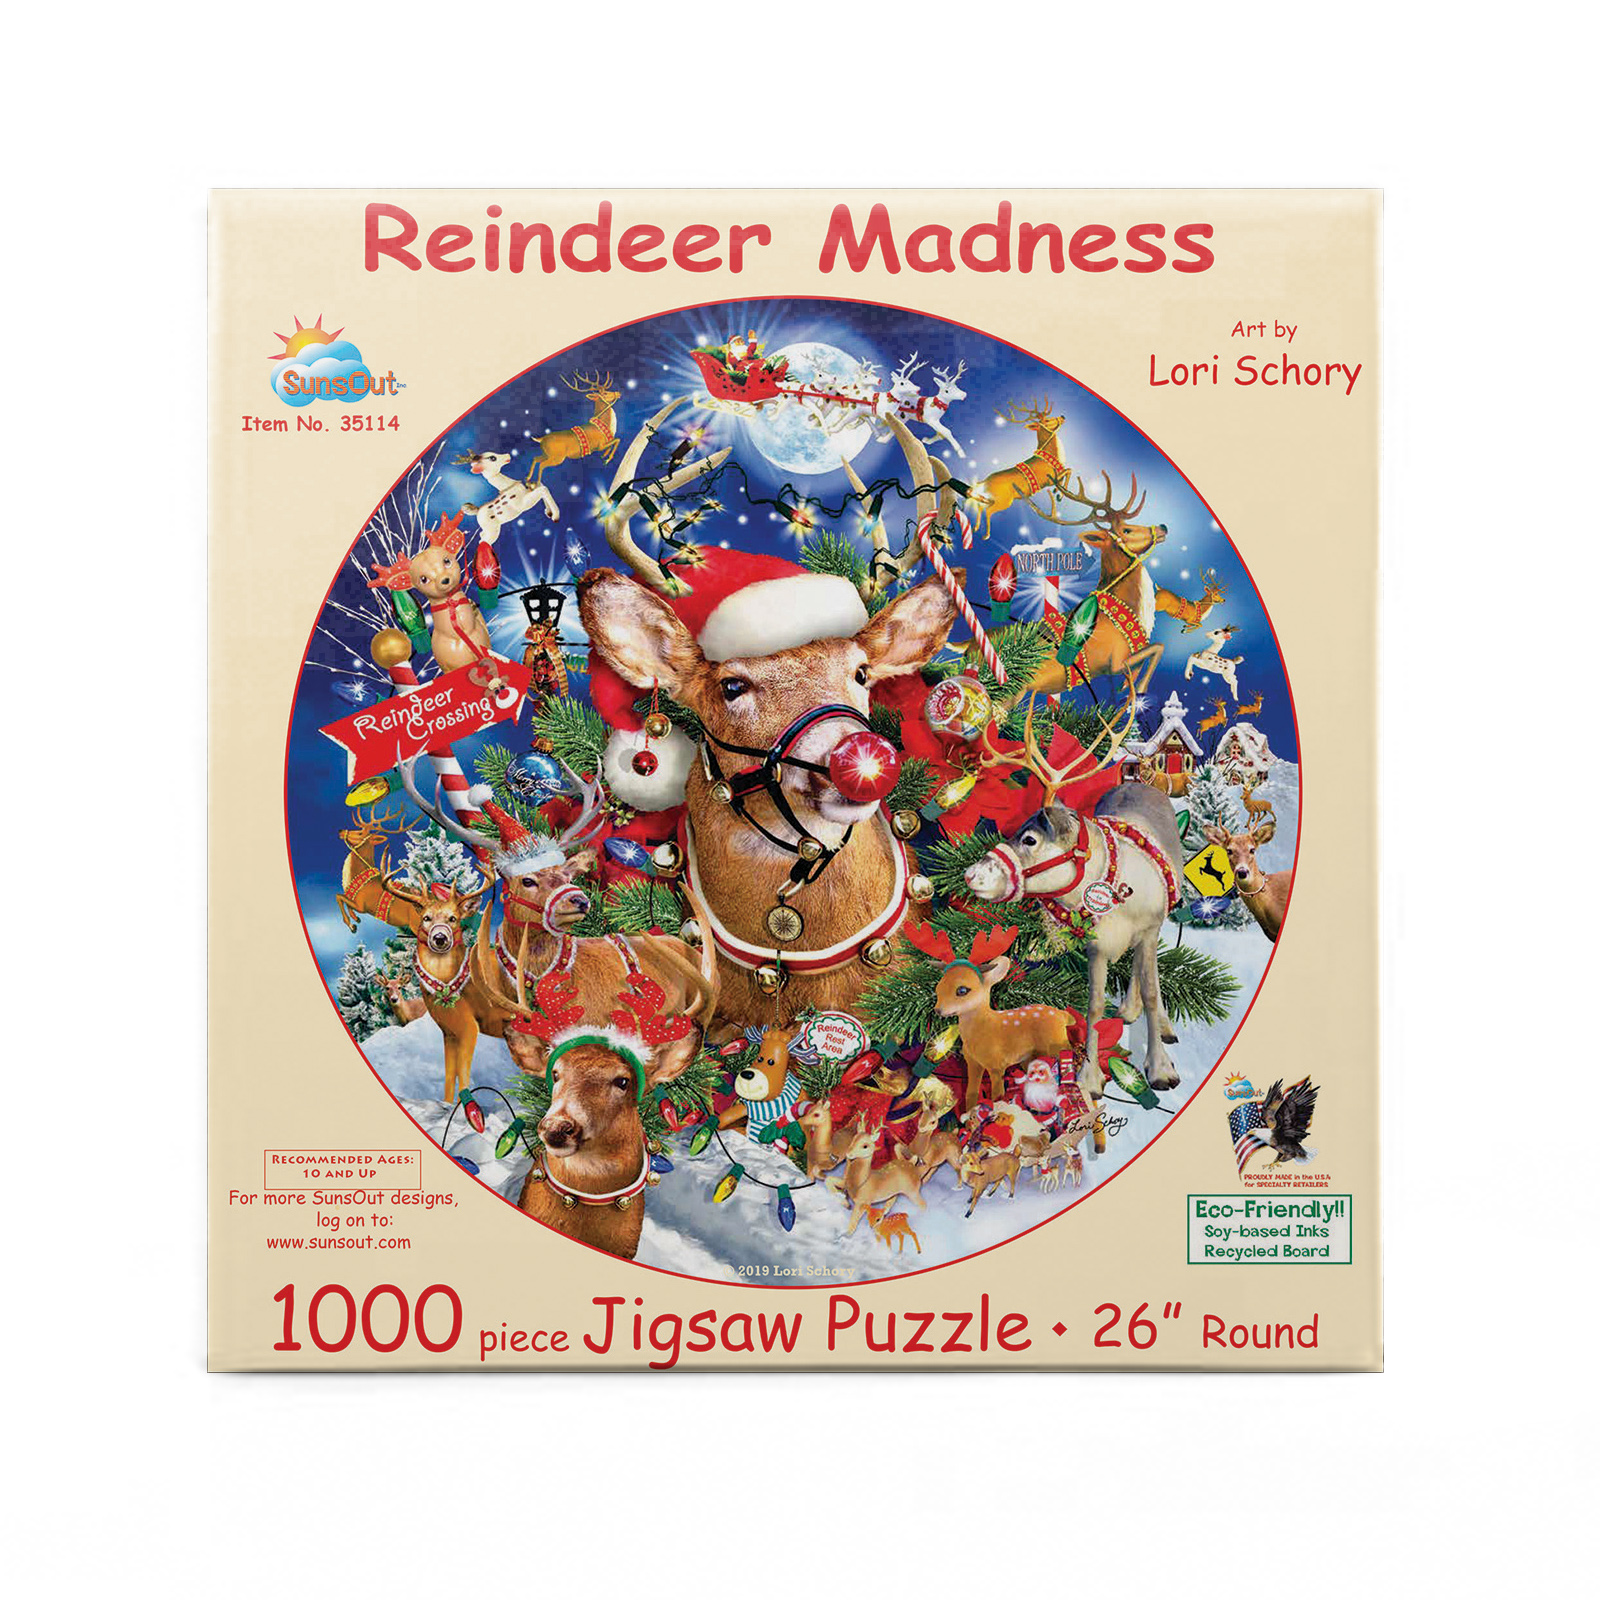 Reindeer Madness